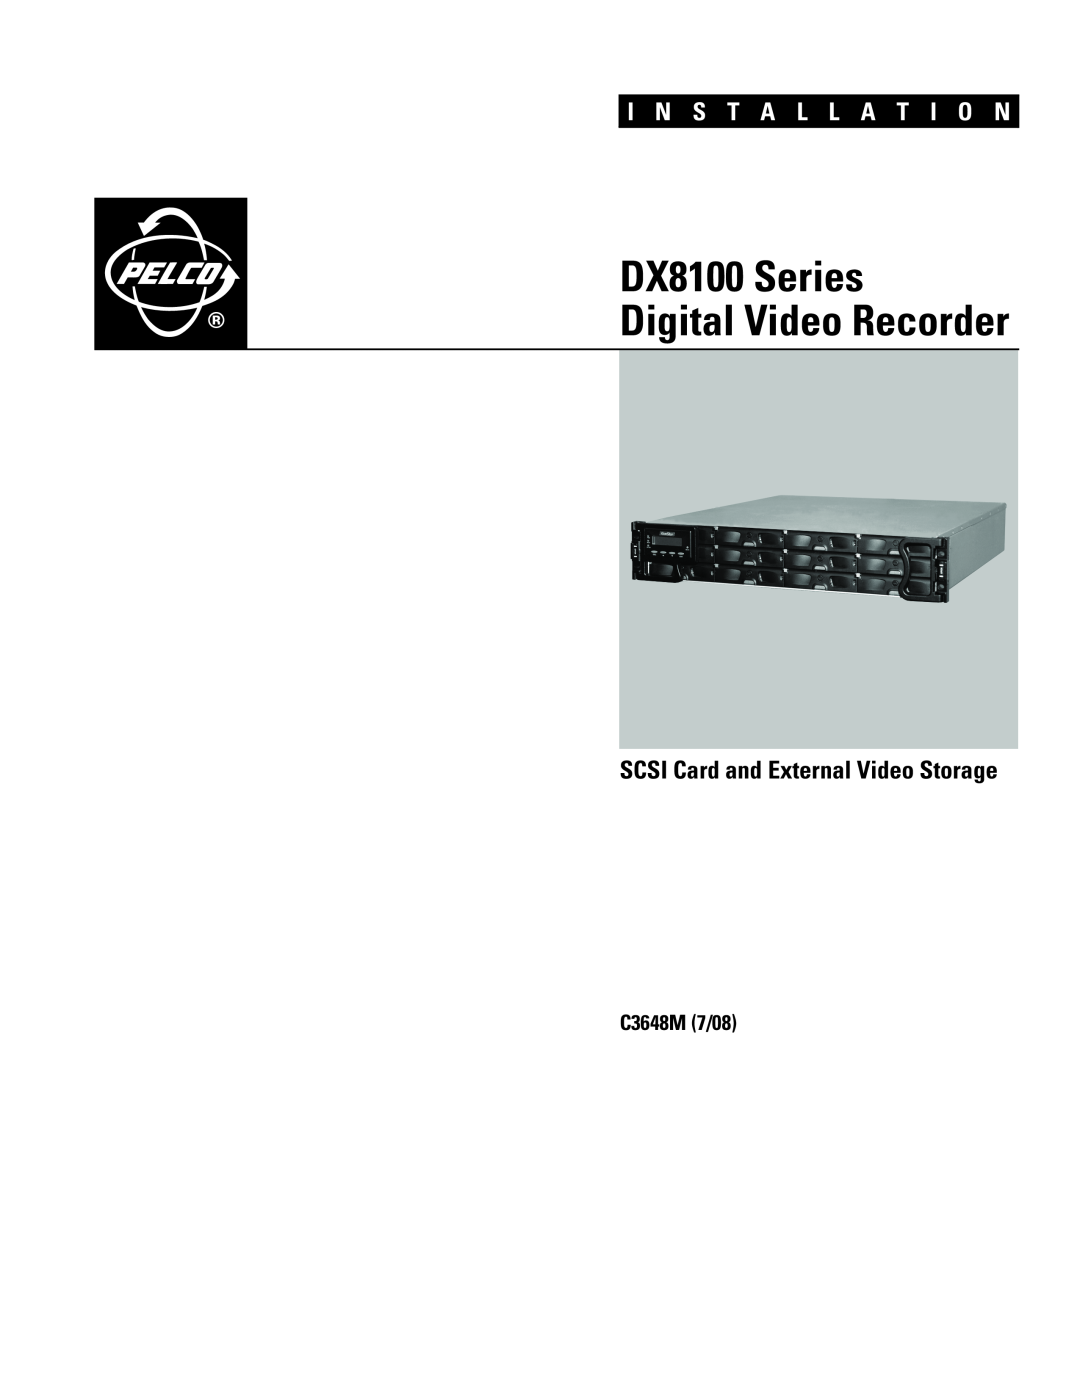 Pelco dx8100 installation instructions DX8100 Series Symantec AntiVirus, Corporate Edition Installation Instructions 